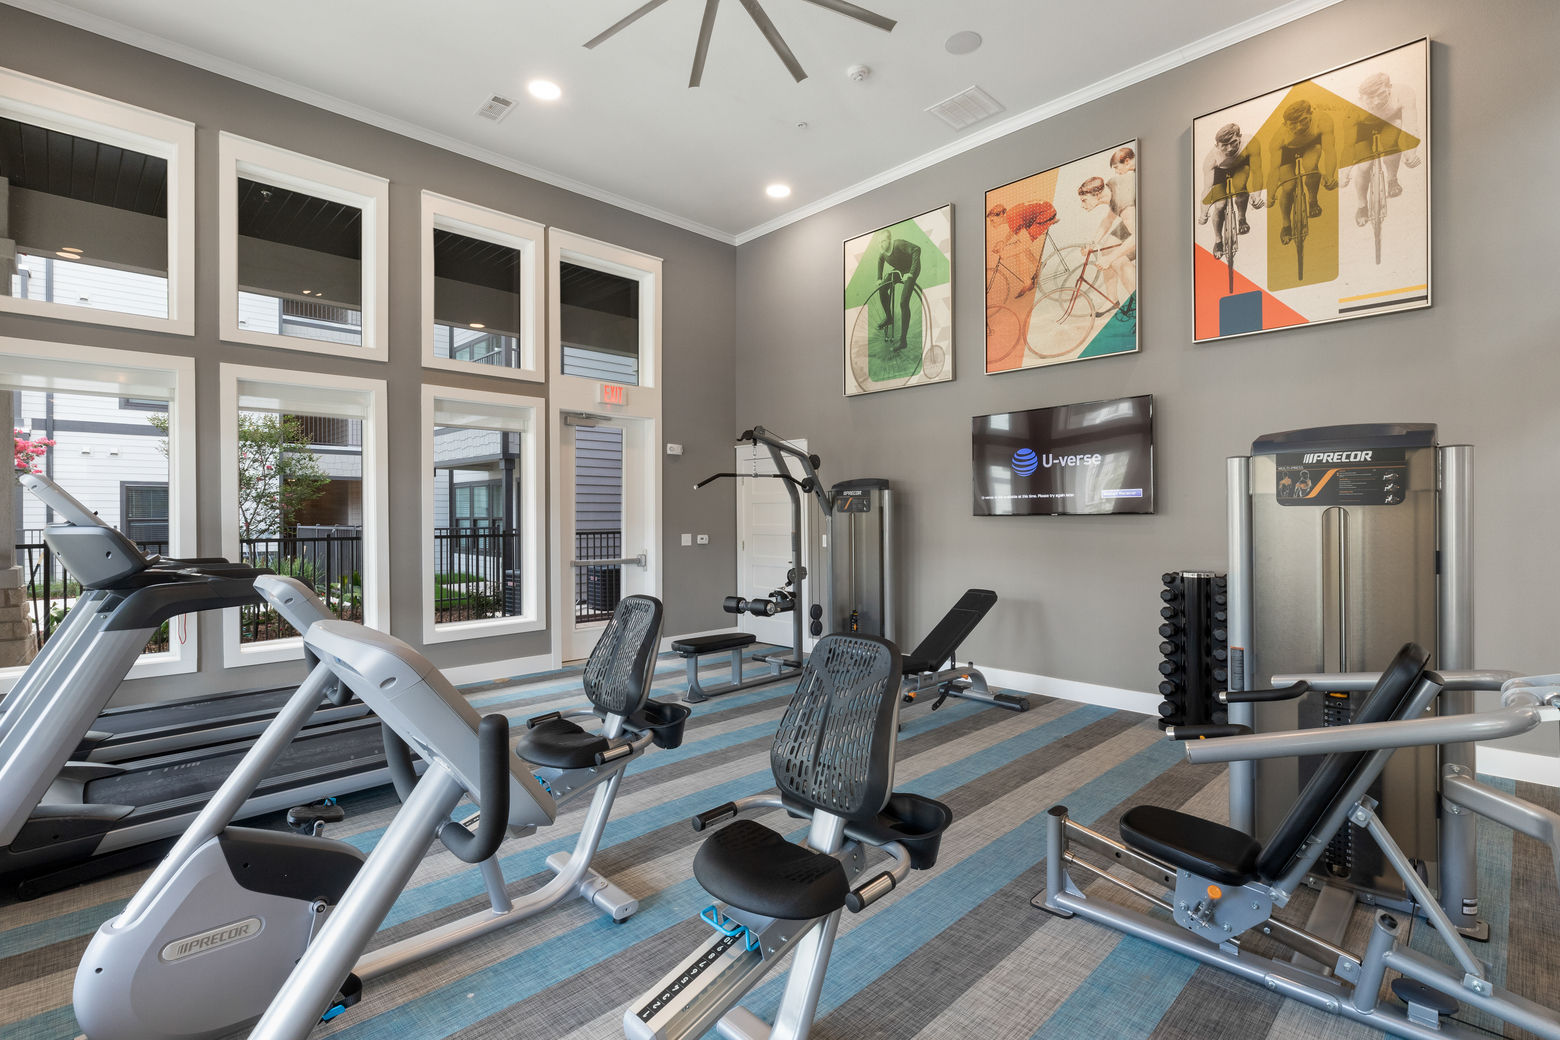 Picture of Solea Alamo Ranch fitness center cardio machines